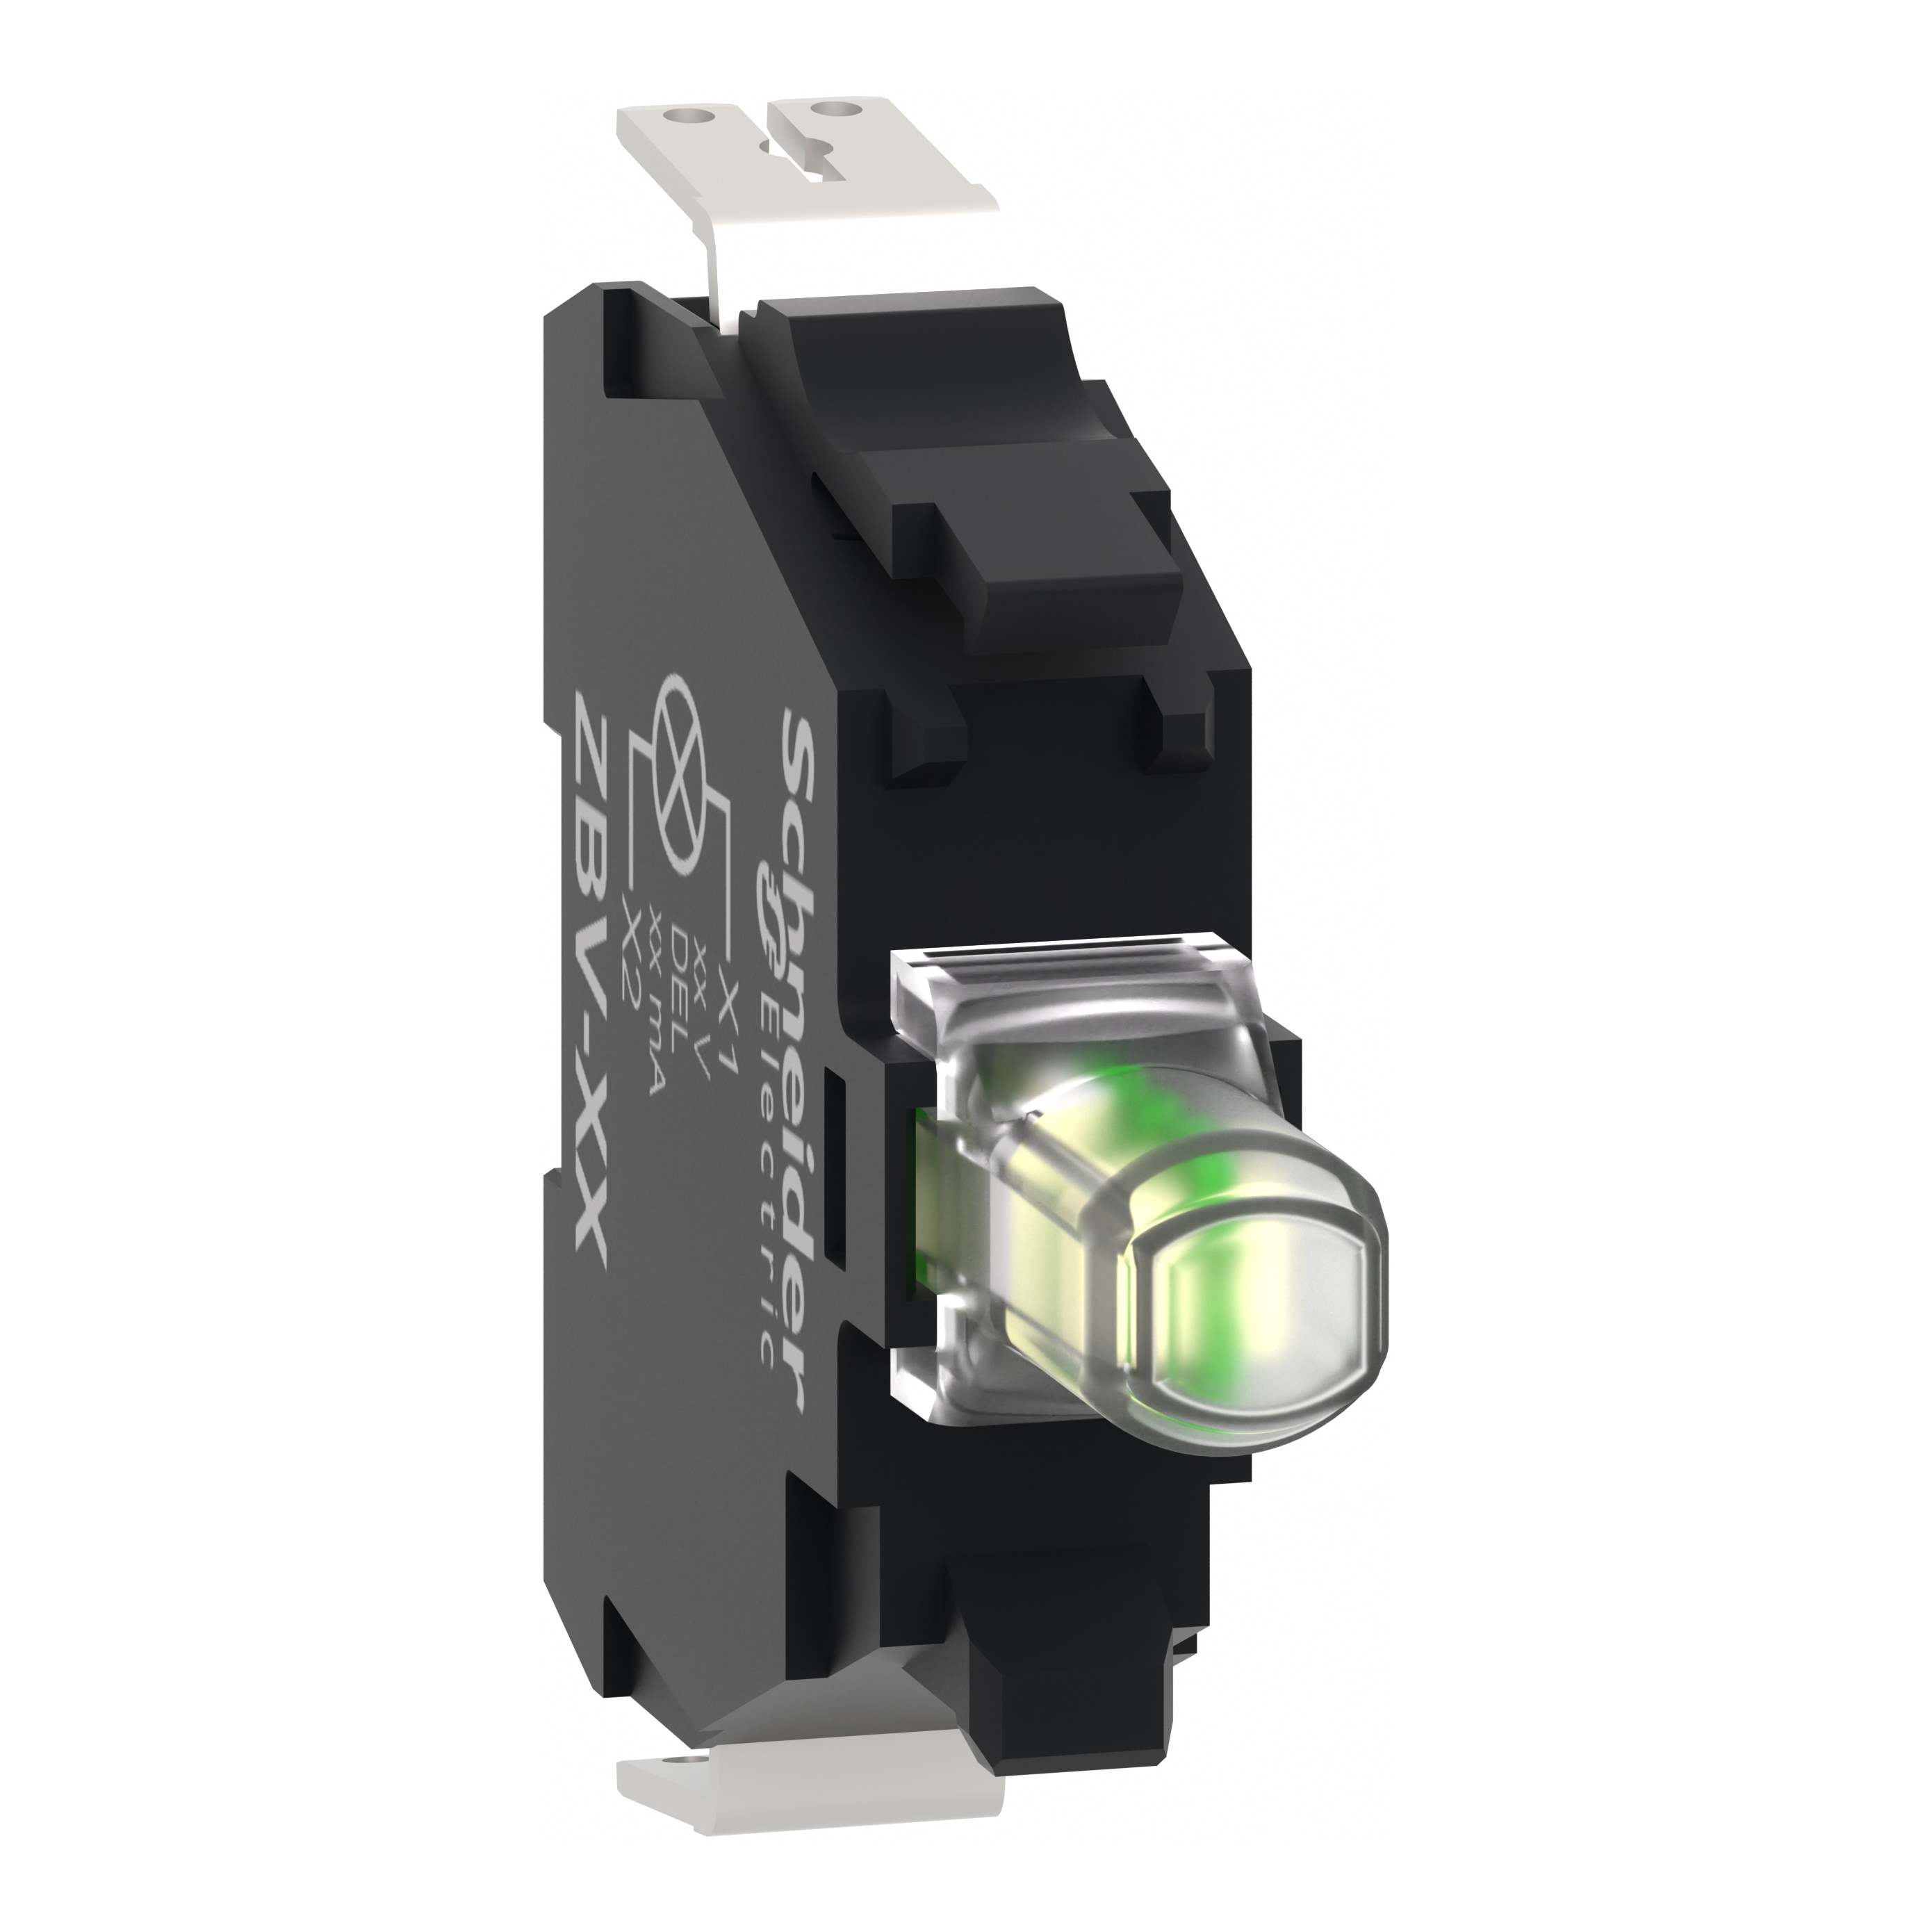 Light block, Harmony XB4, Harmony XB5, for head 22mm, universal LED, faston connector, 110...120V